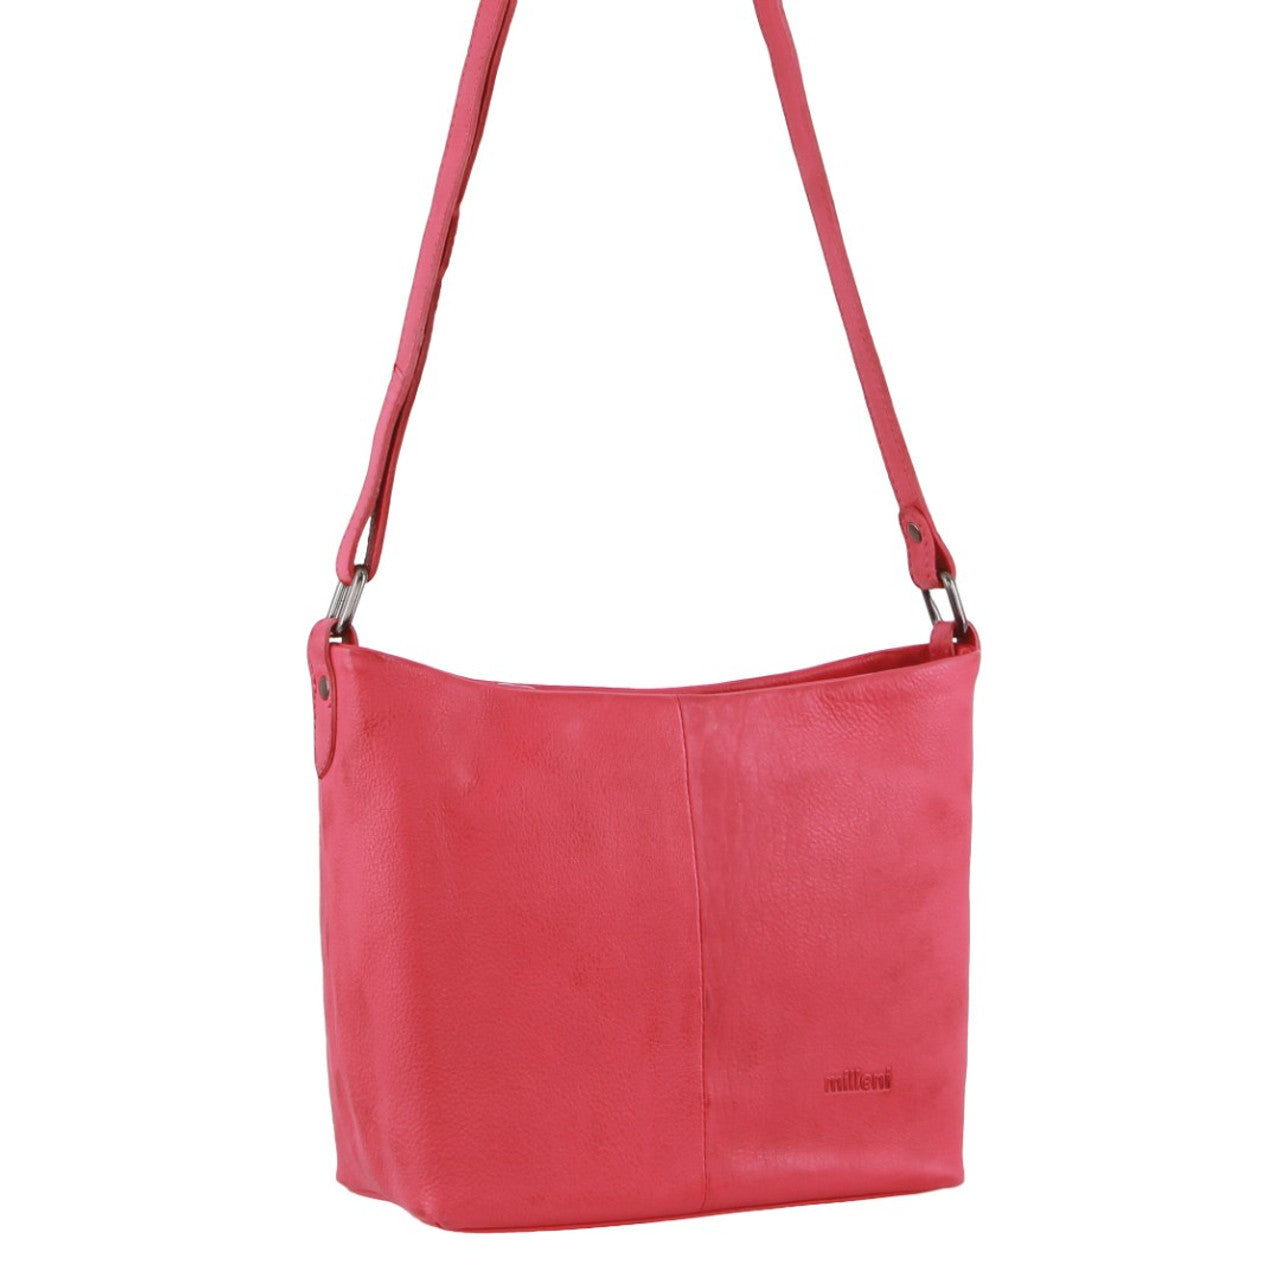 Milleni - NL2789 Leather cross body bag - Pink